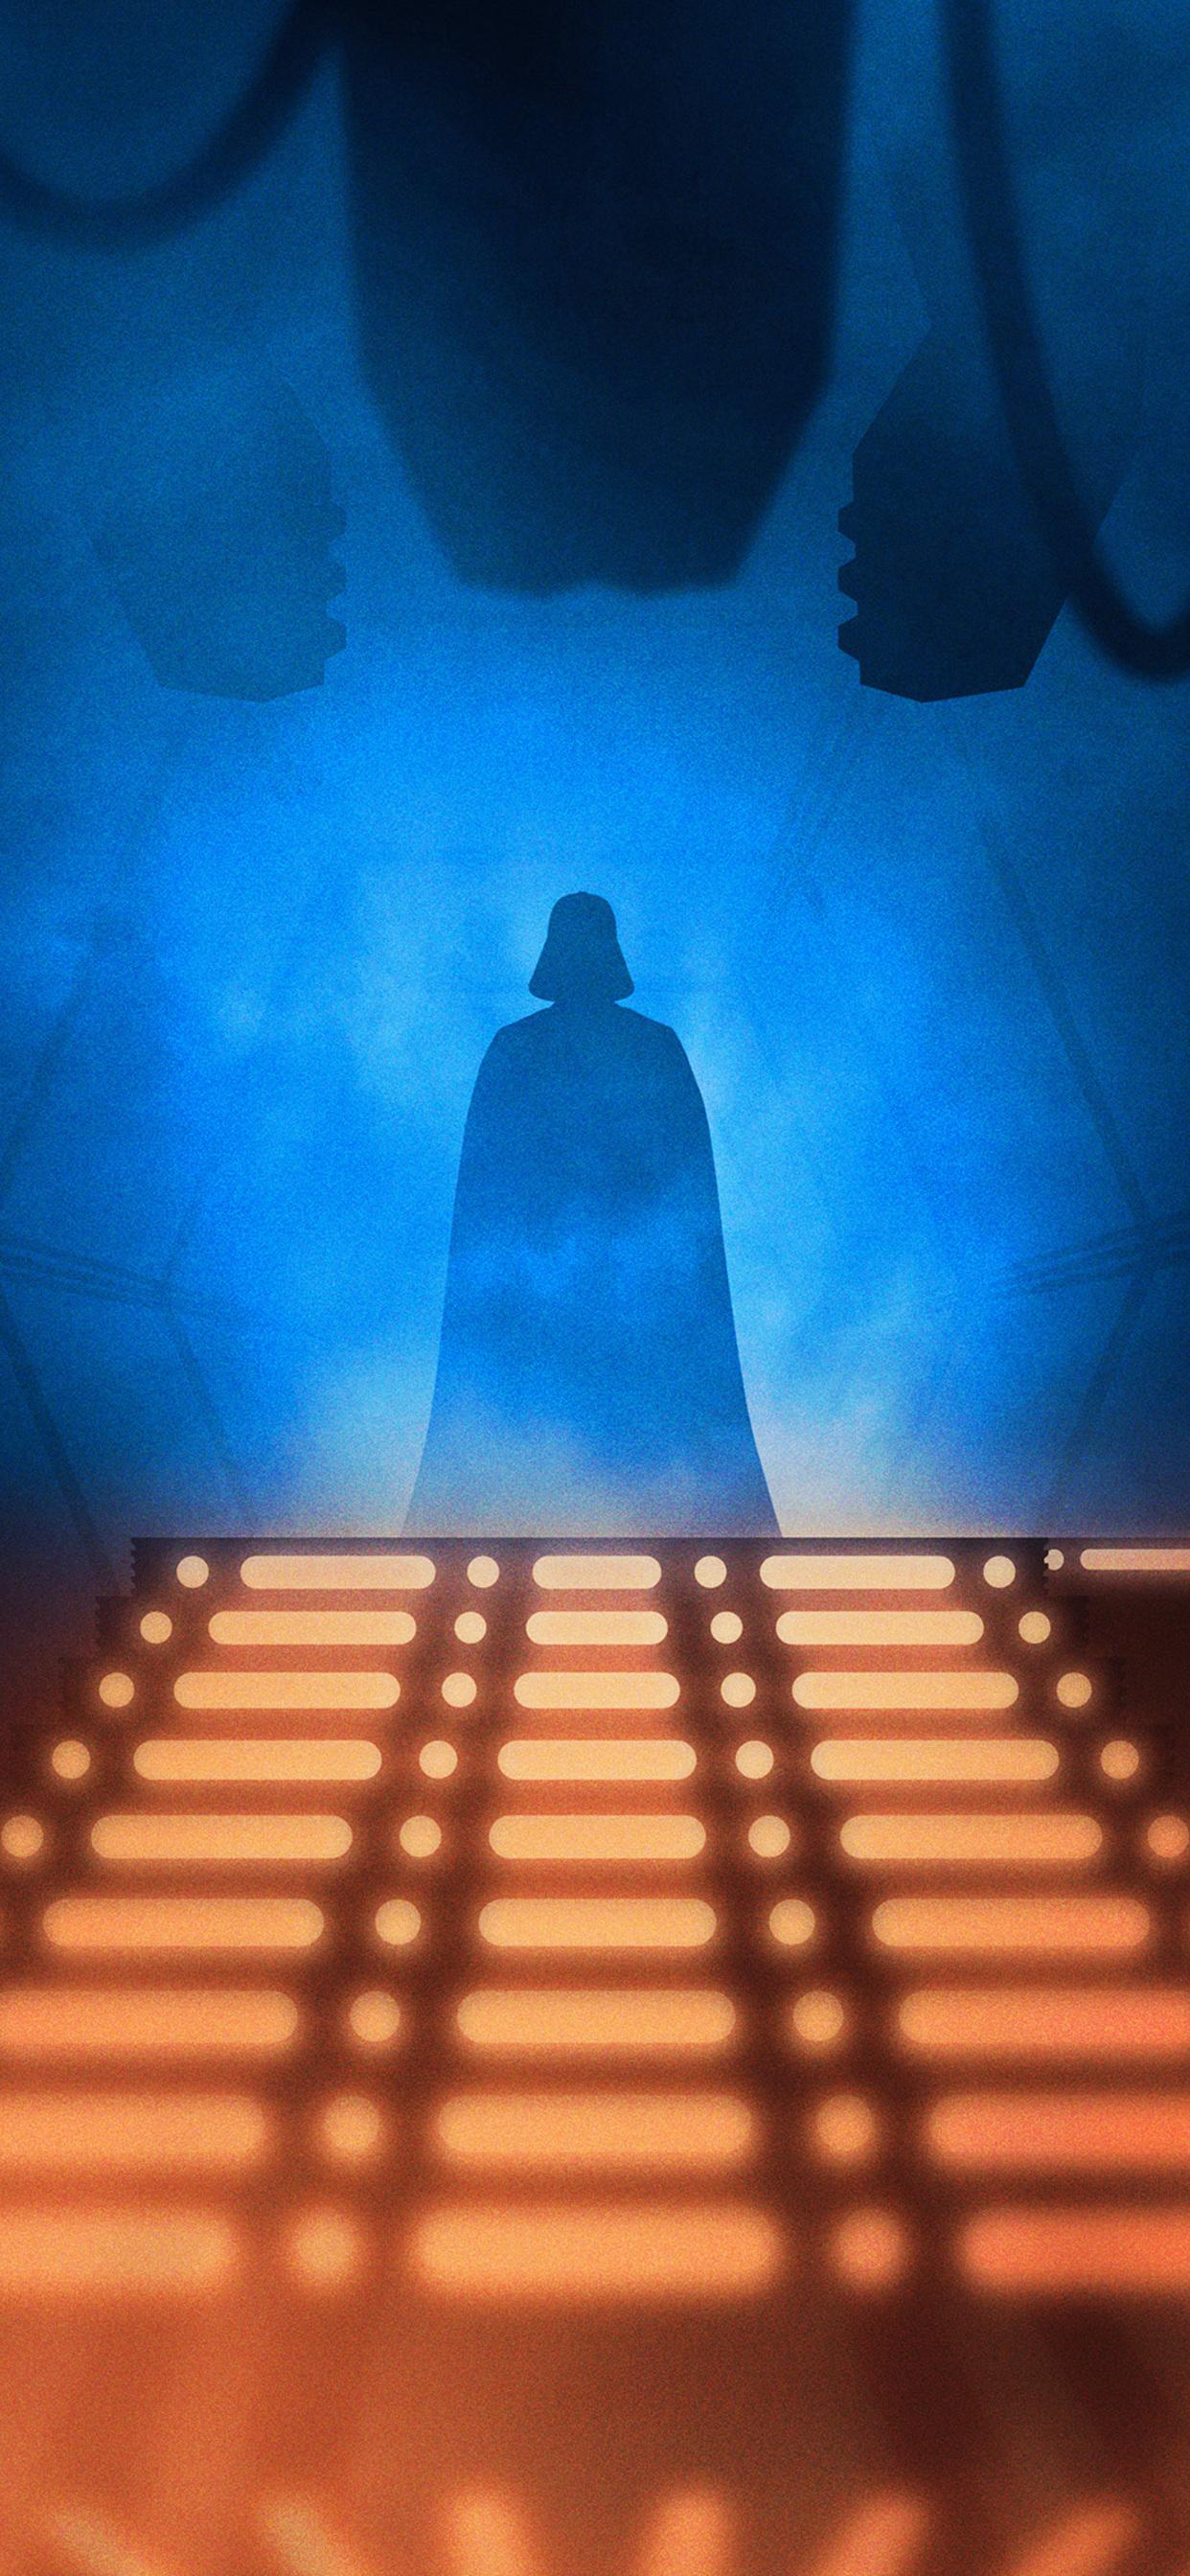 Iphone Darth Vader Cool Star Wars Wallpaper Singebloggg